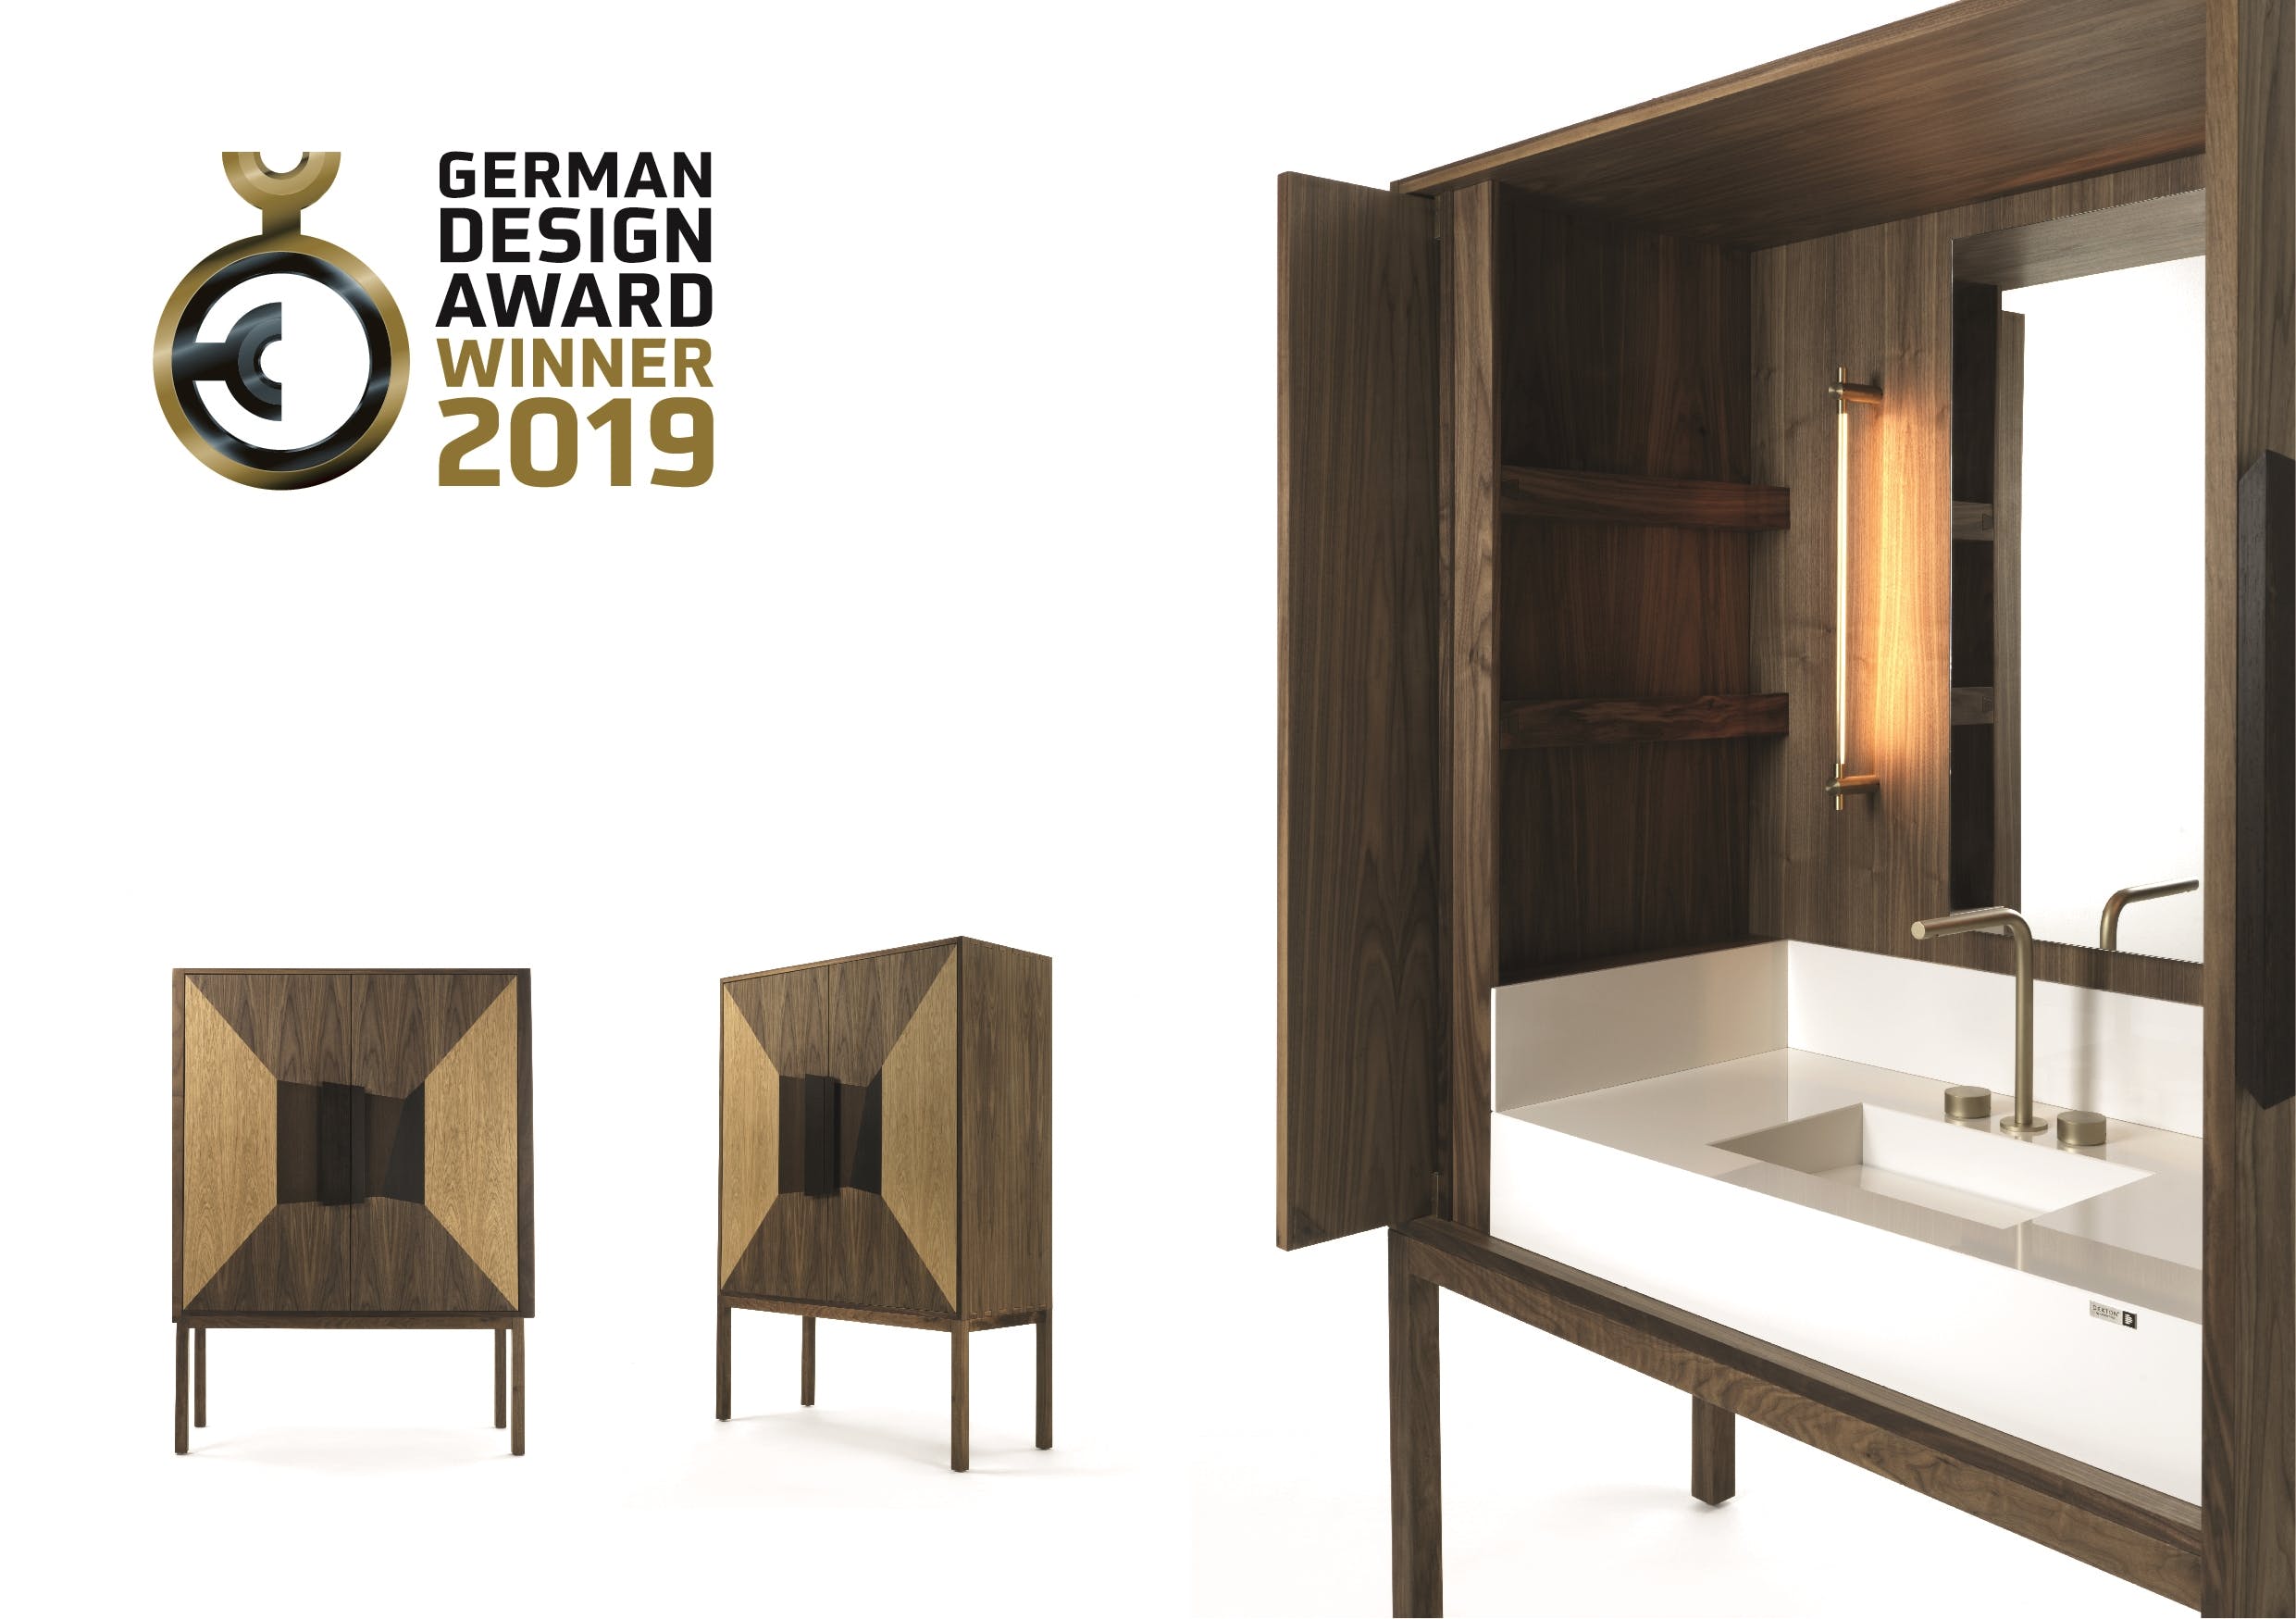 Image 33 of Dekauri German Design Award 2019 1 in DeKauri, German Design Award 2019 - Cosentino